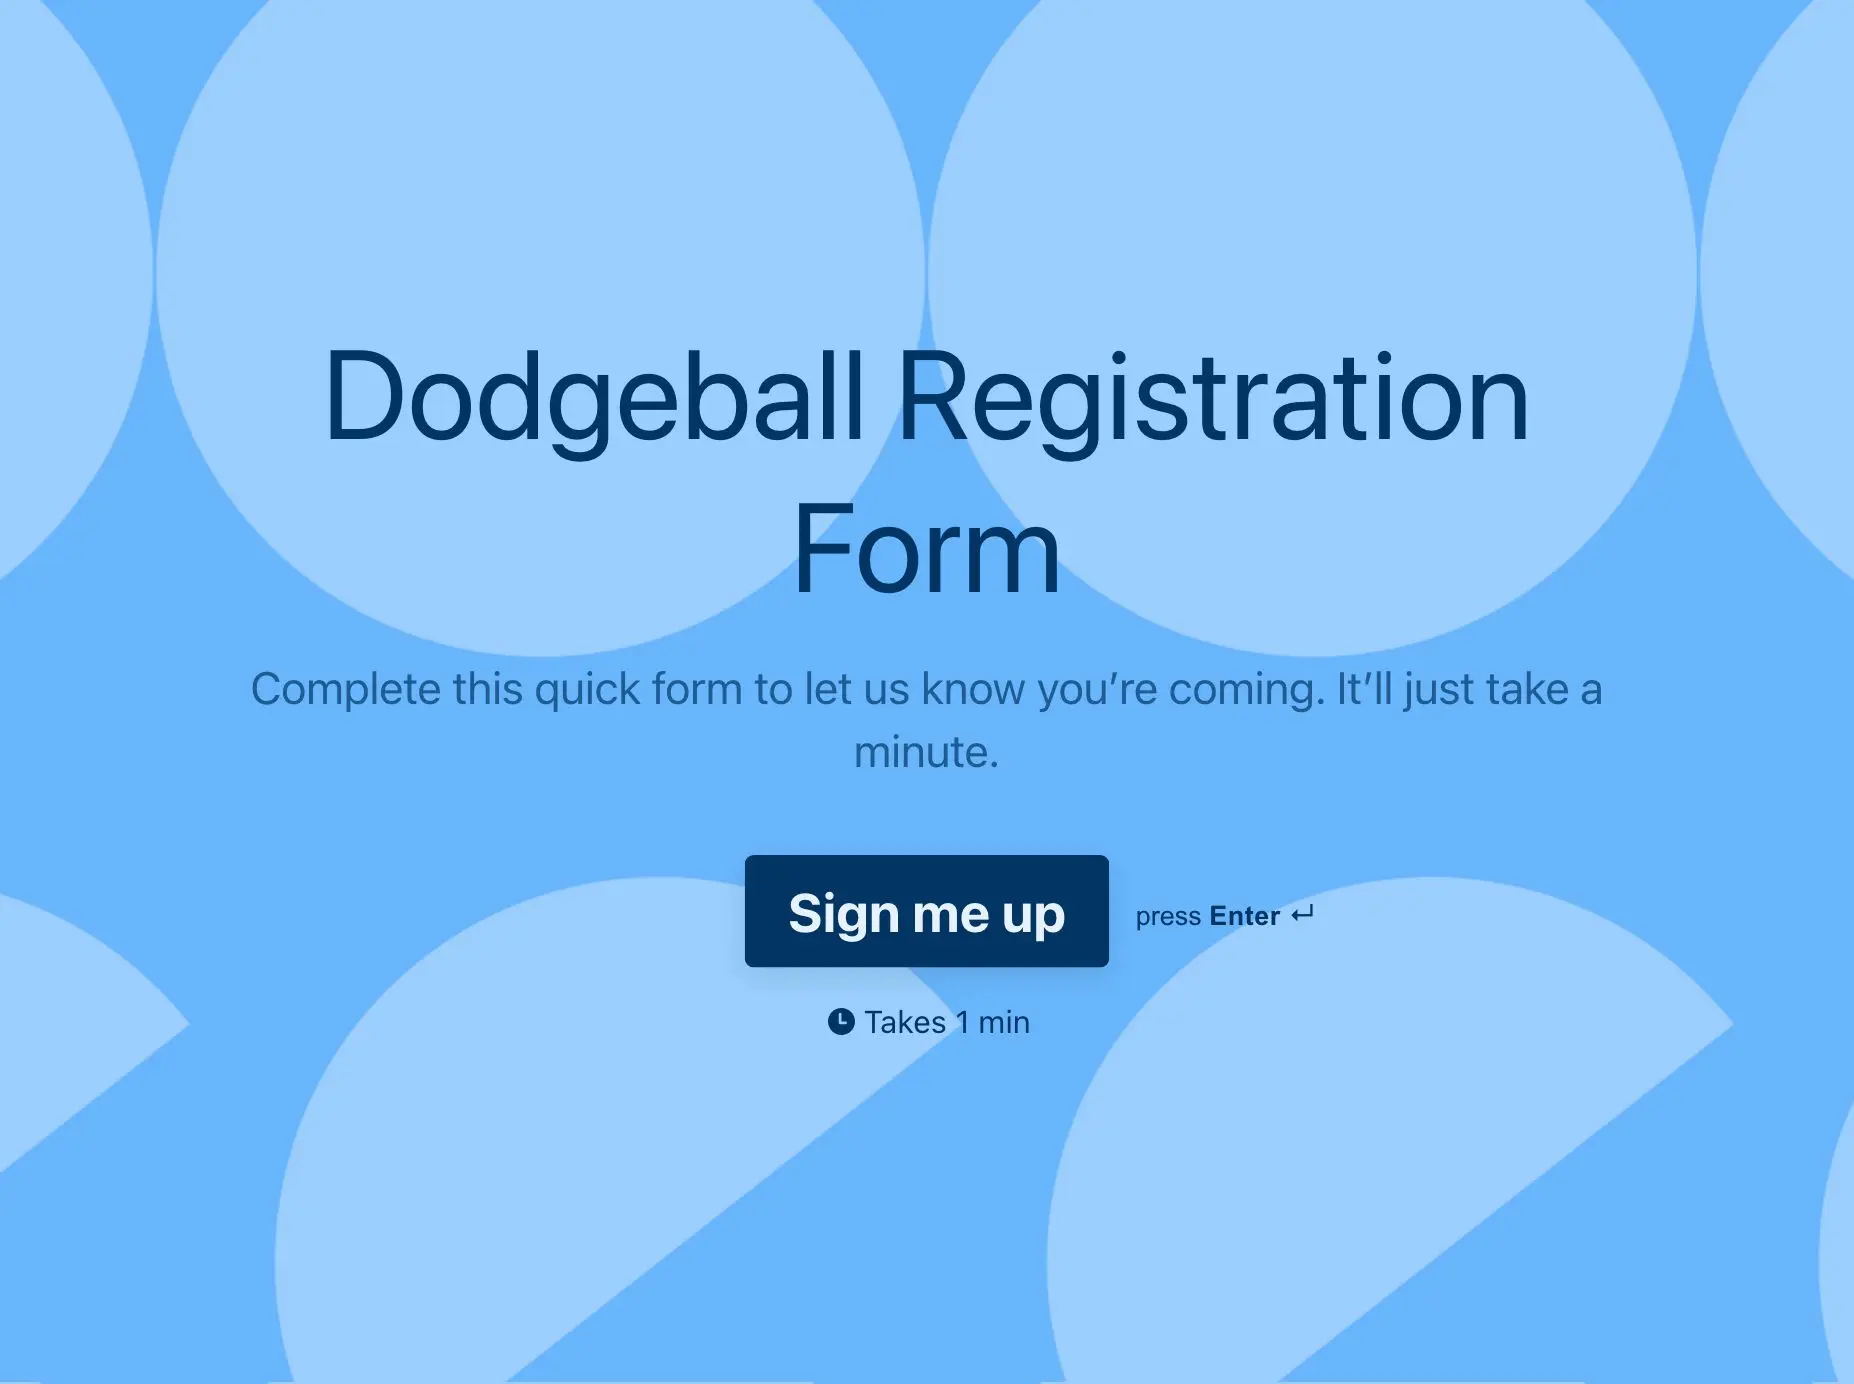 Dodgeball Registration Form Template Hero